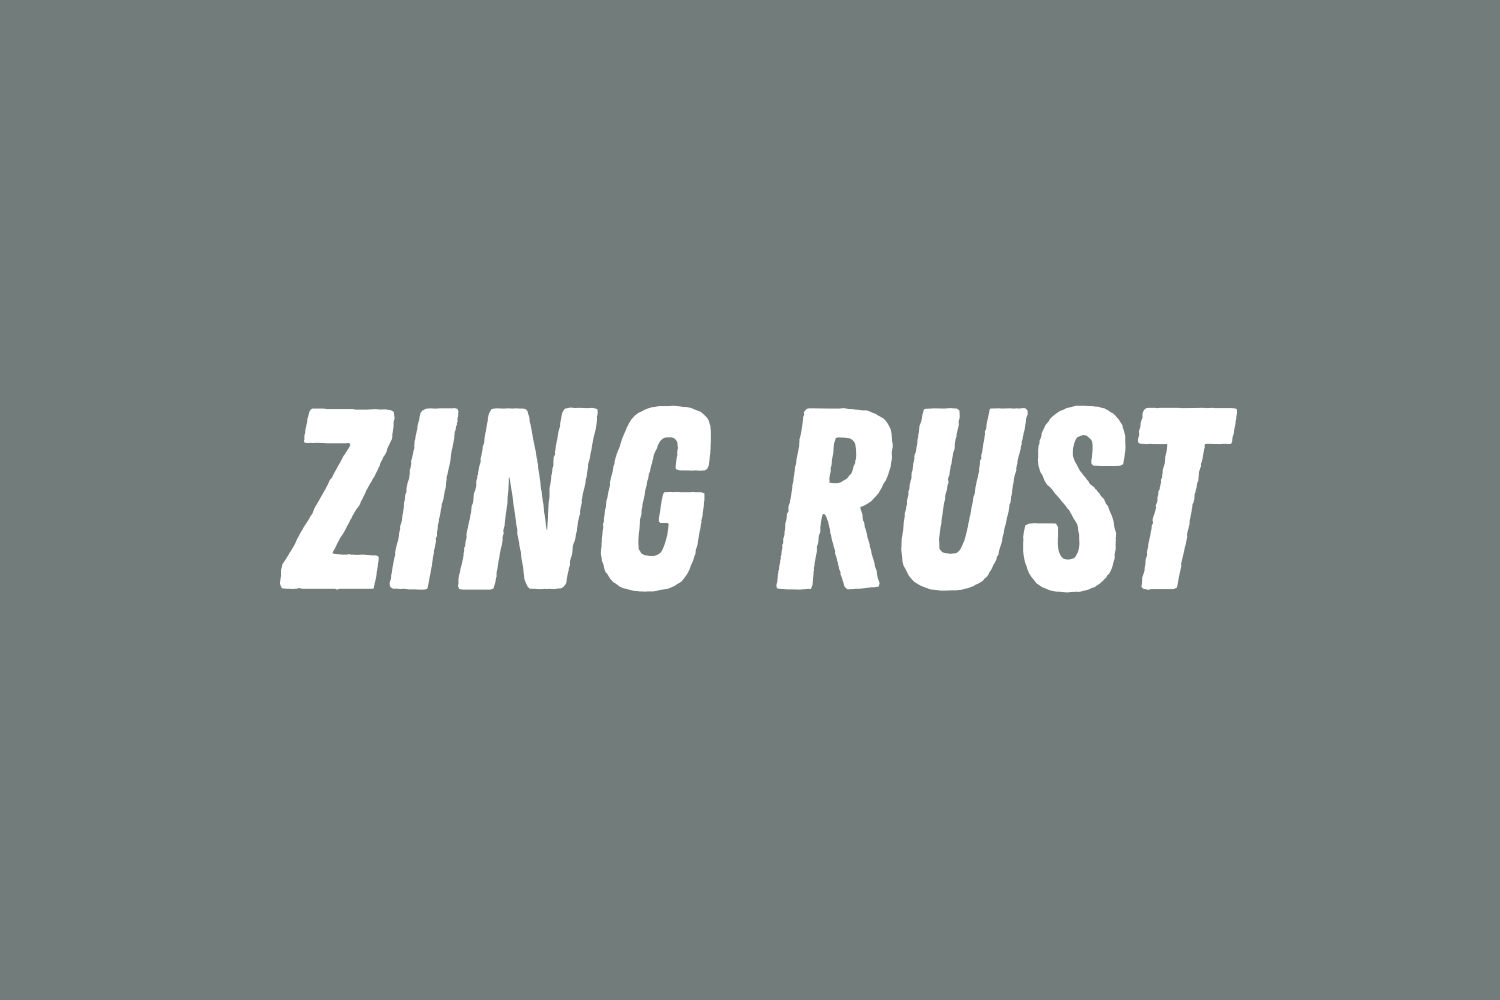 Zing script rust regular base grunge фото 7